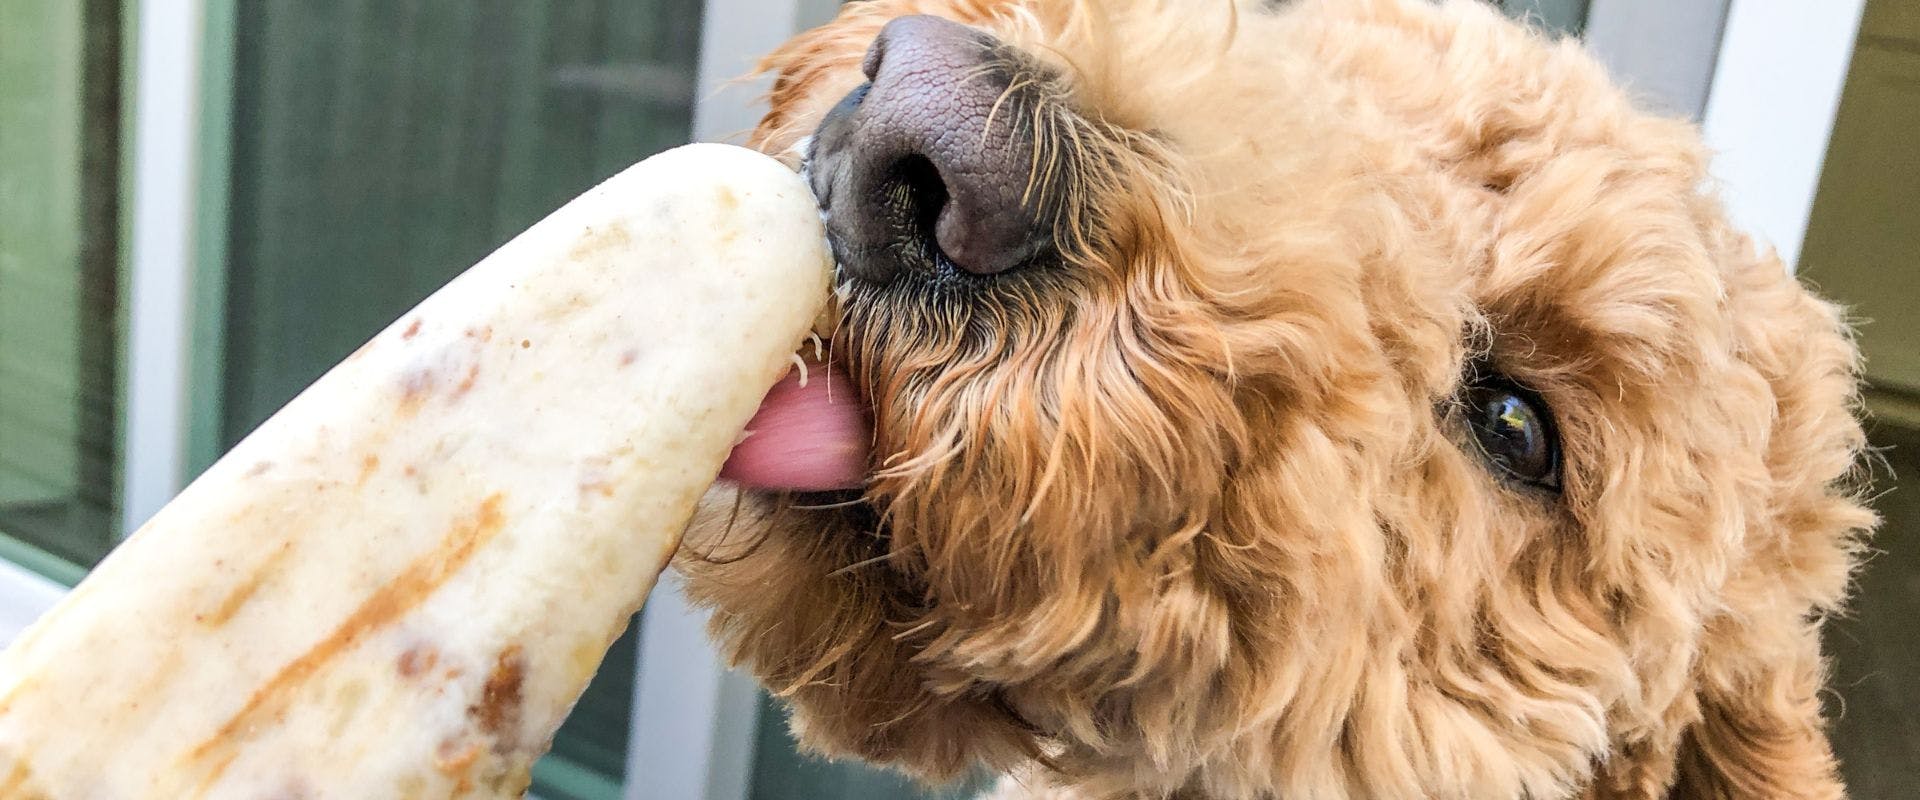 Dog eating peanut ice lolly